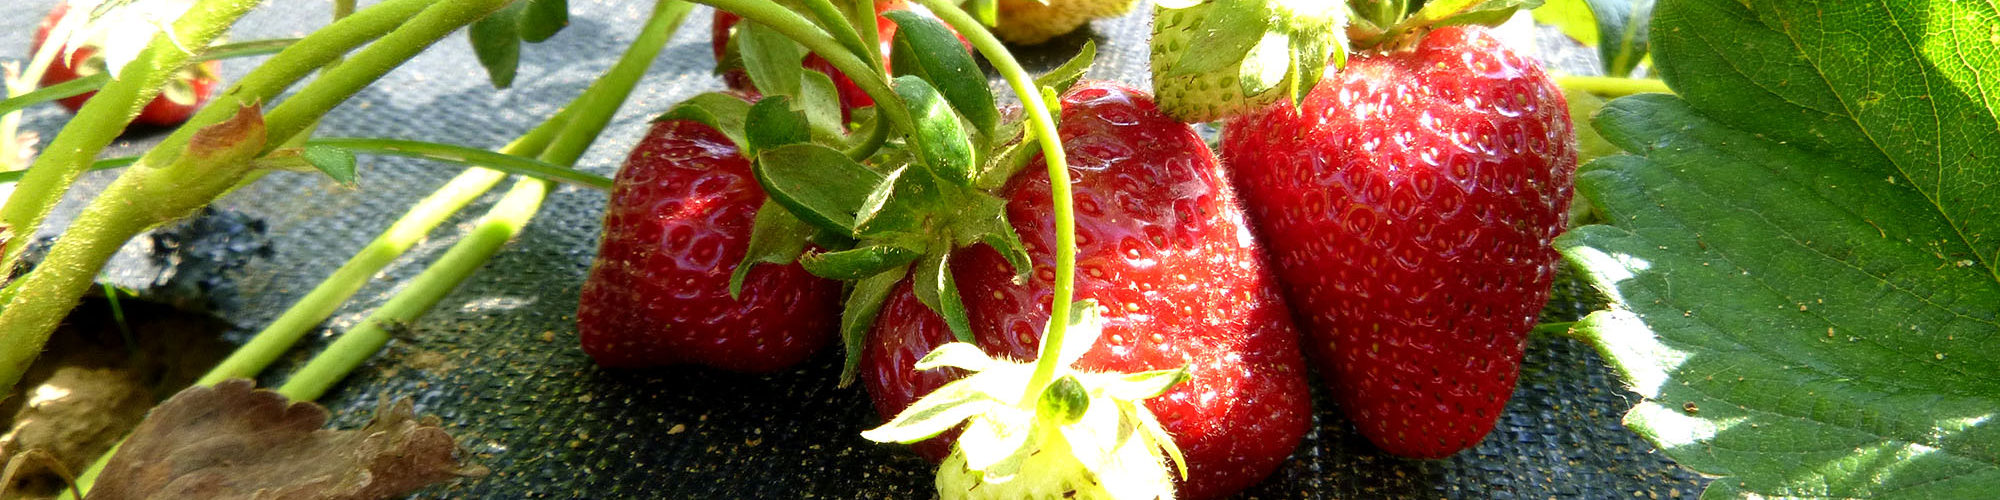 Strawberries grown on Full Sun Farm